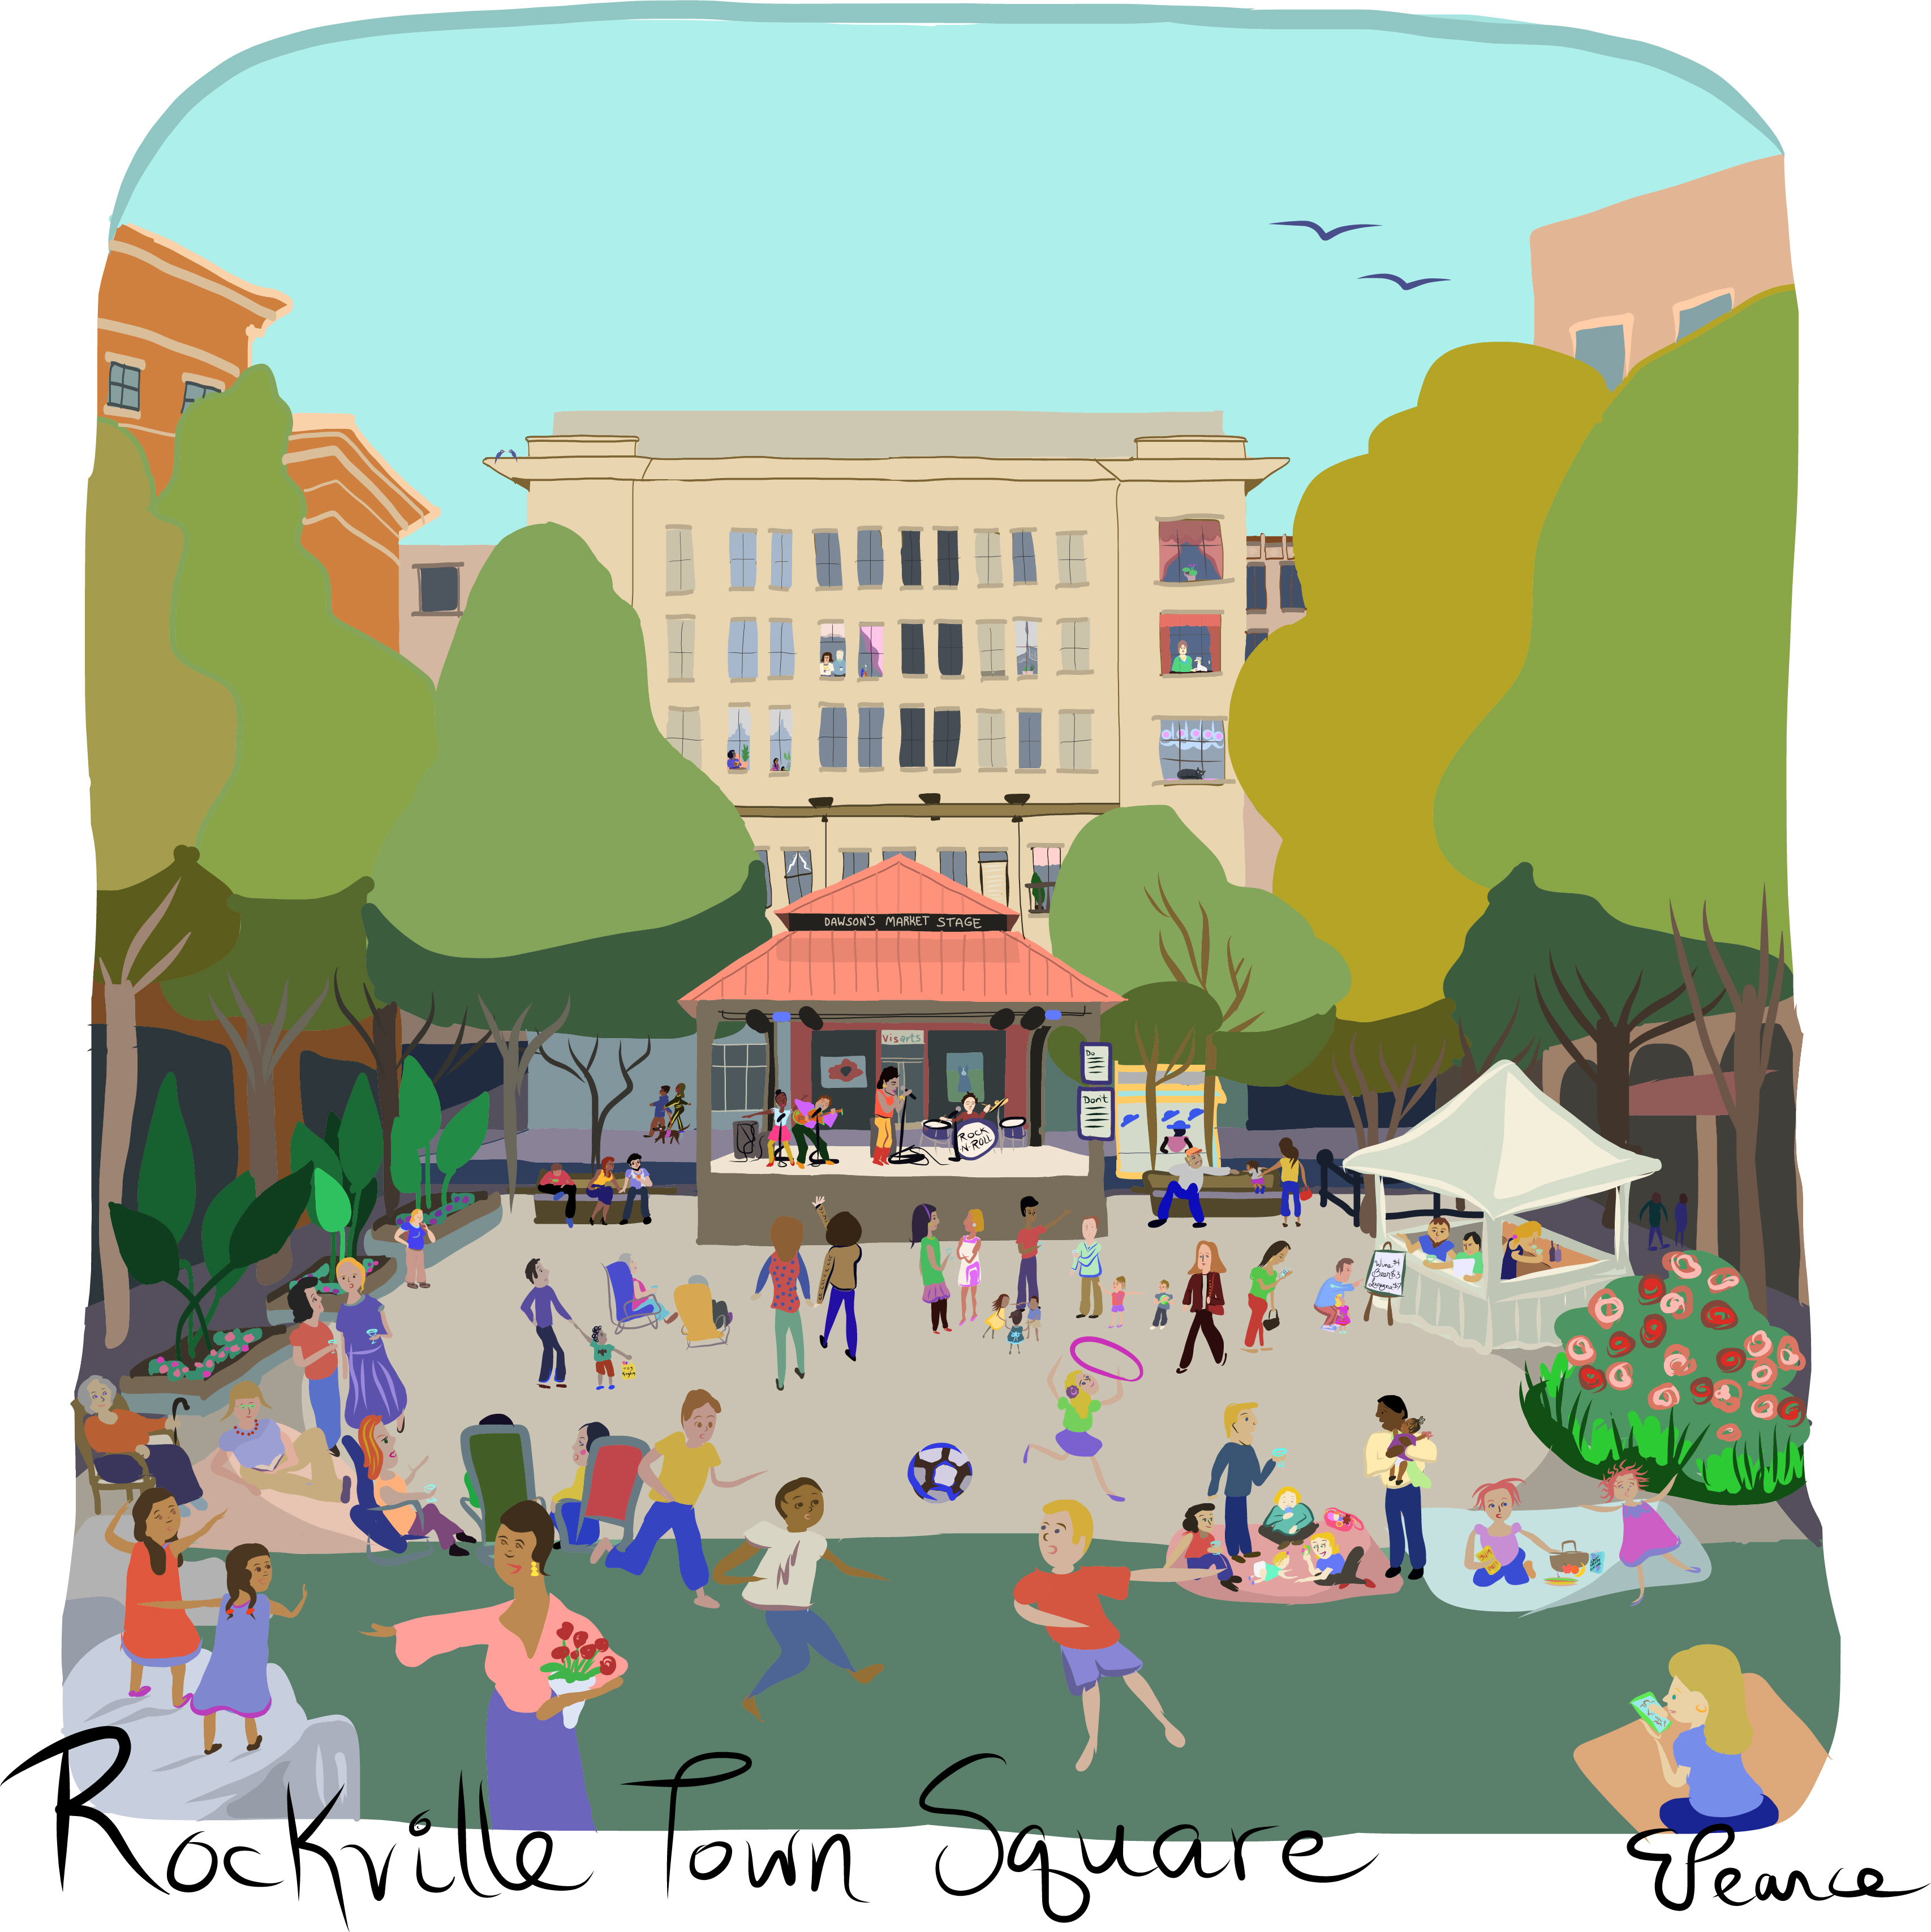 Rockville town square.